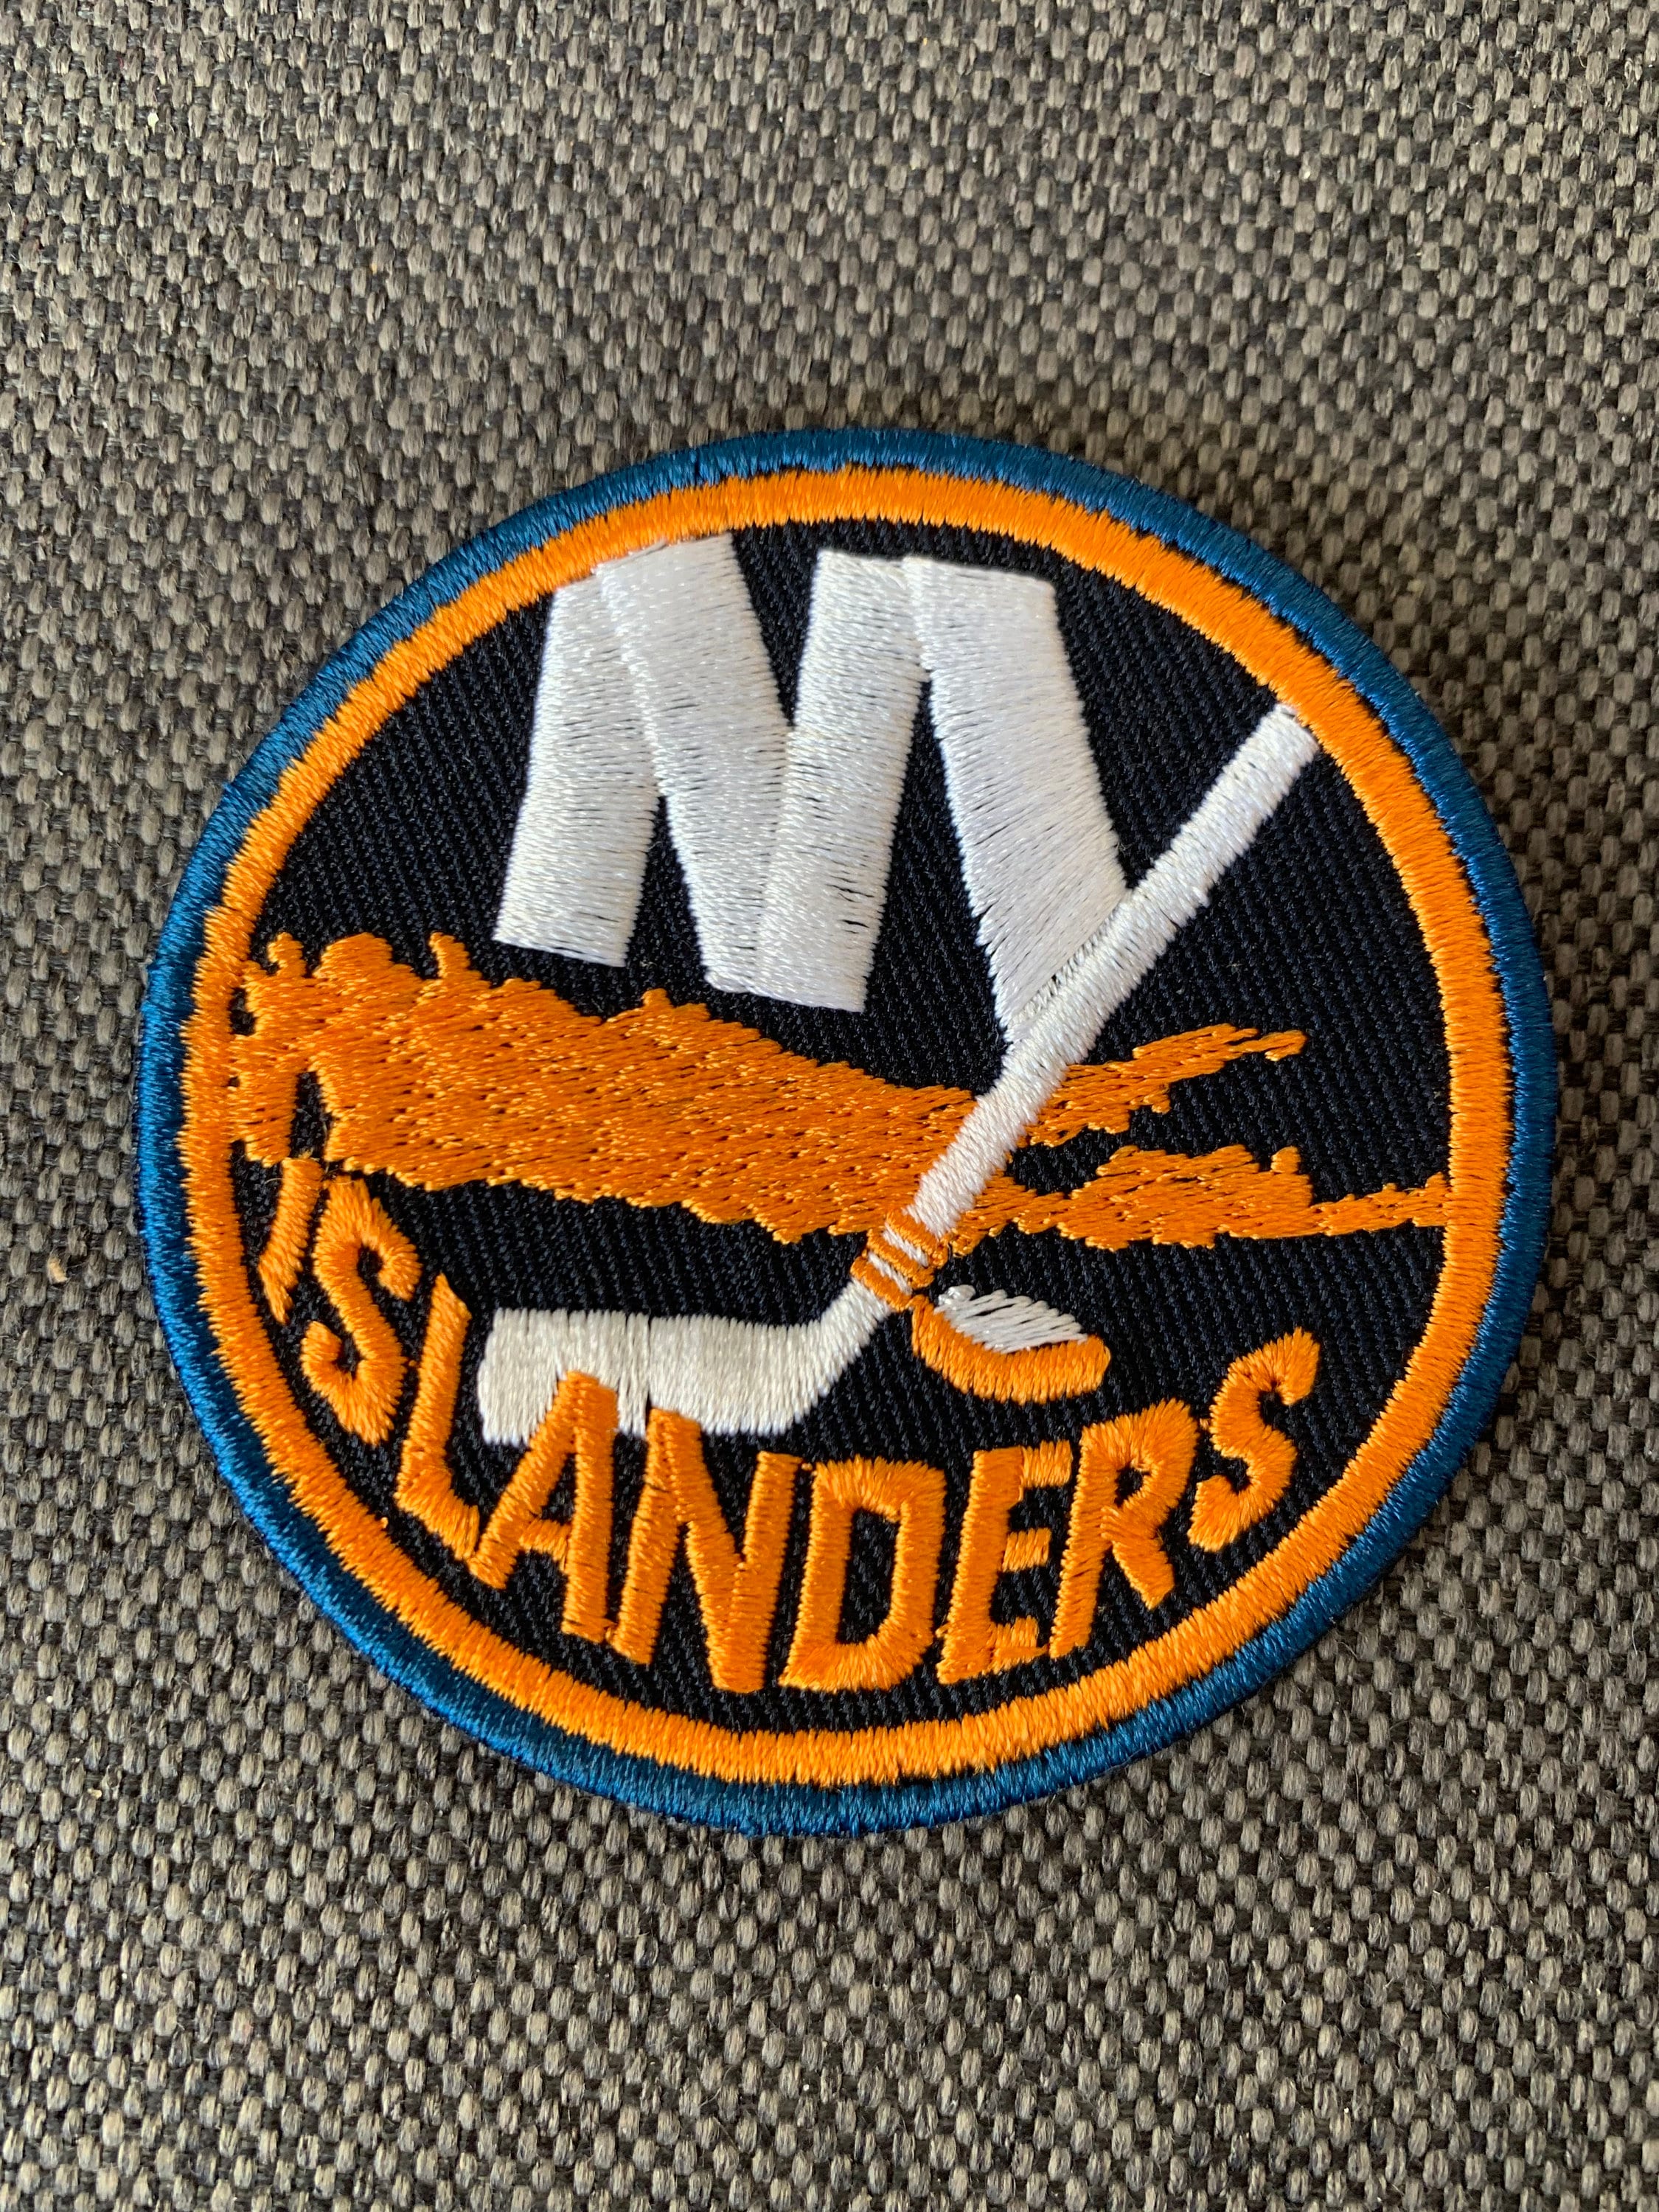 47 Brand Sureshot New York Islanders 1996 All Star Game Patch